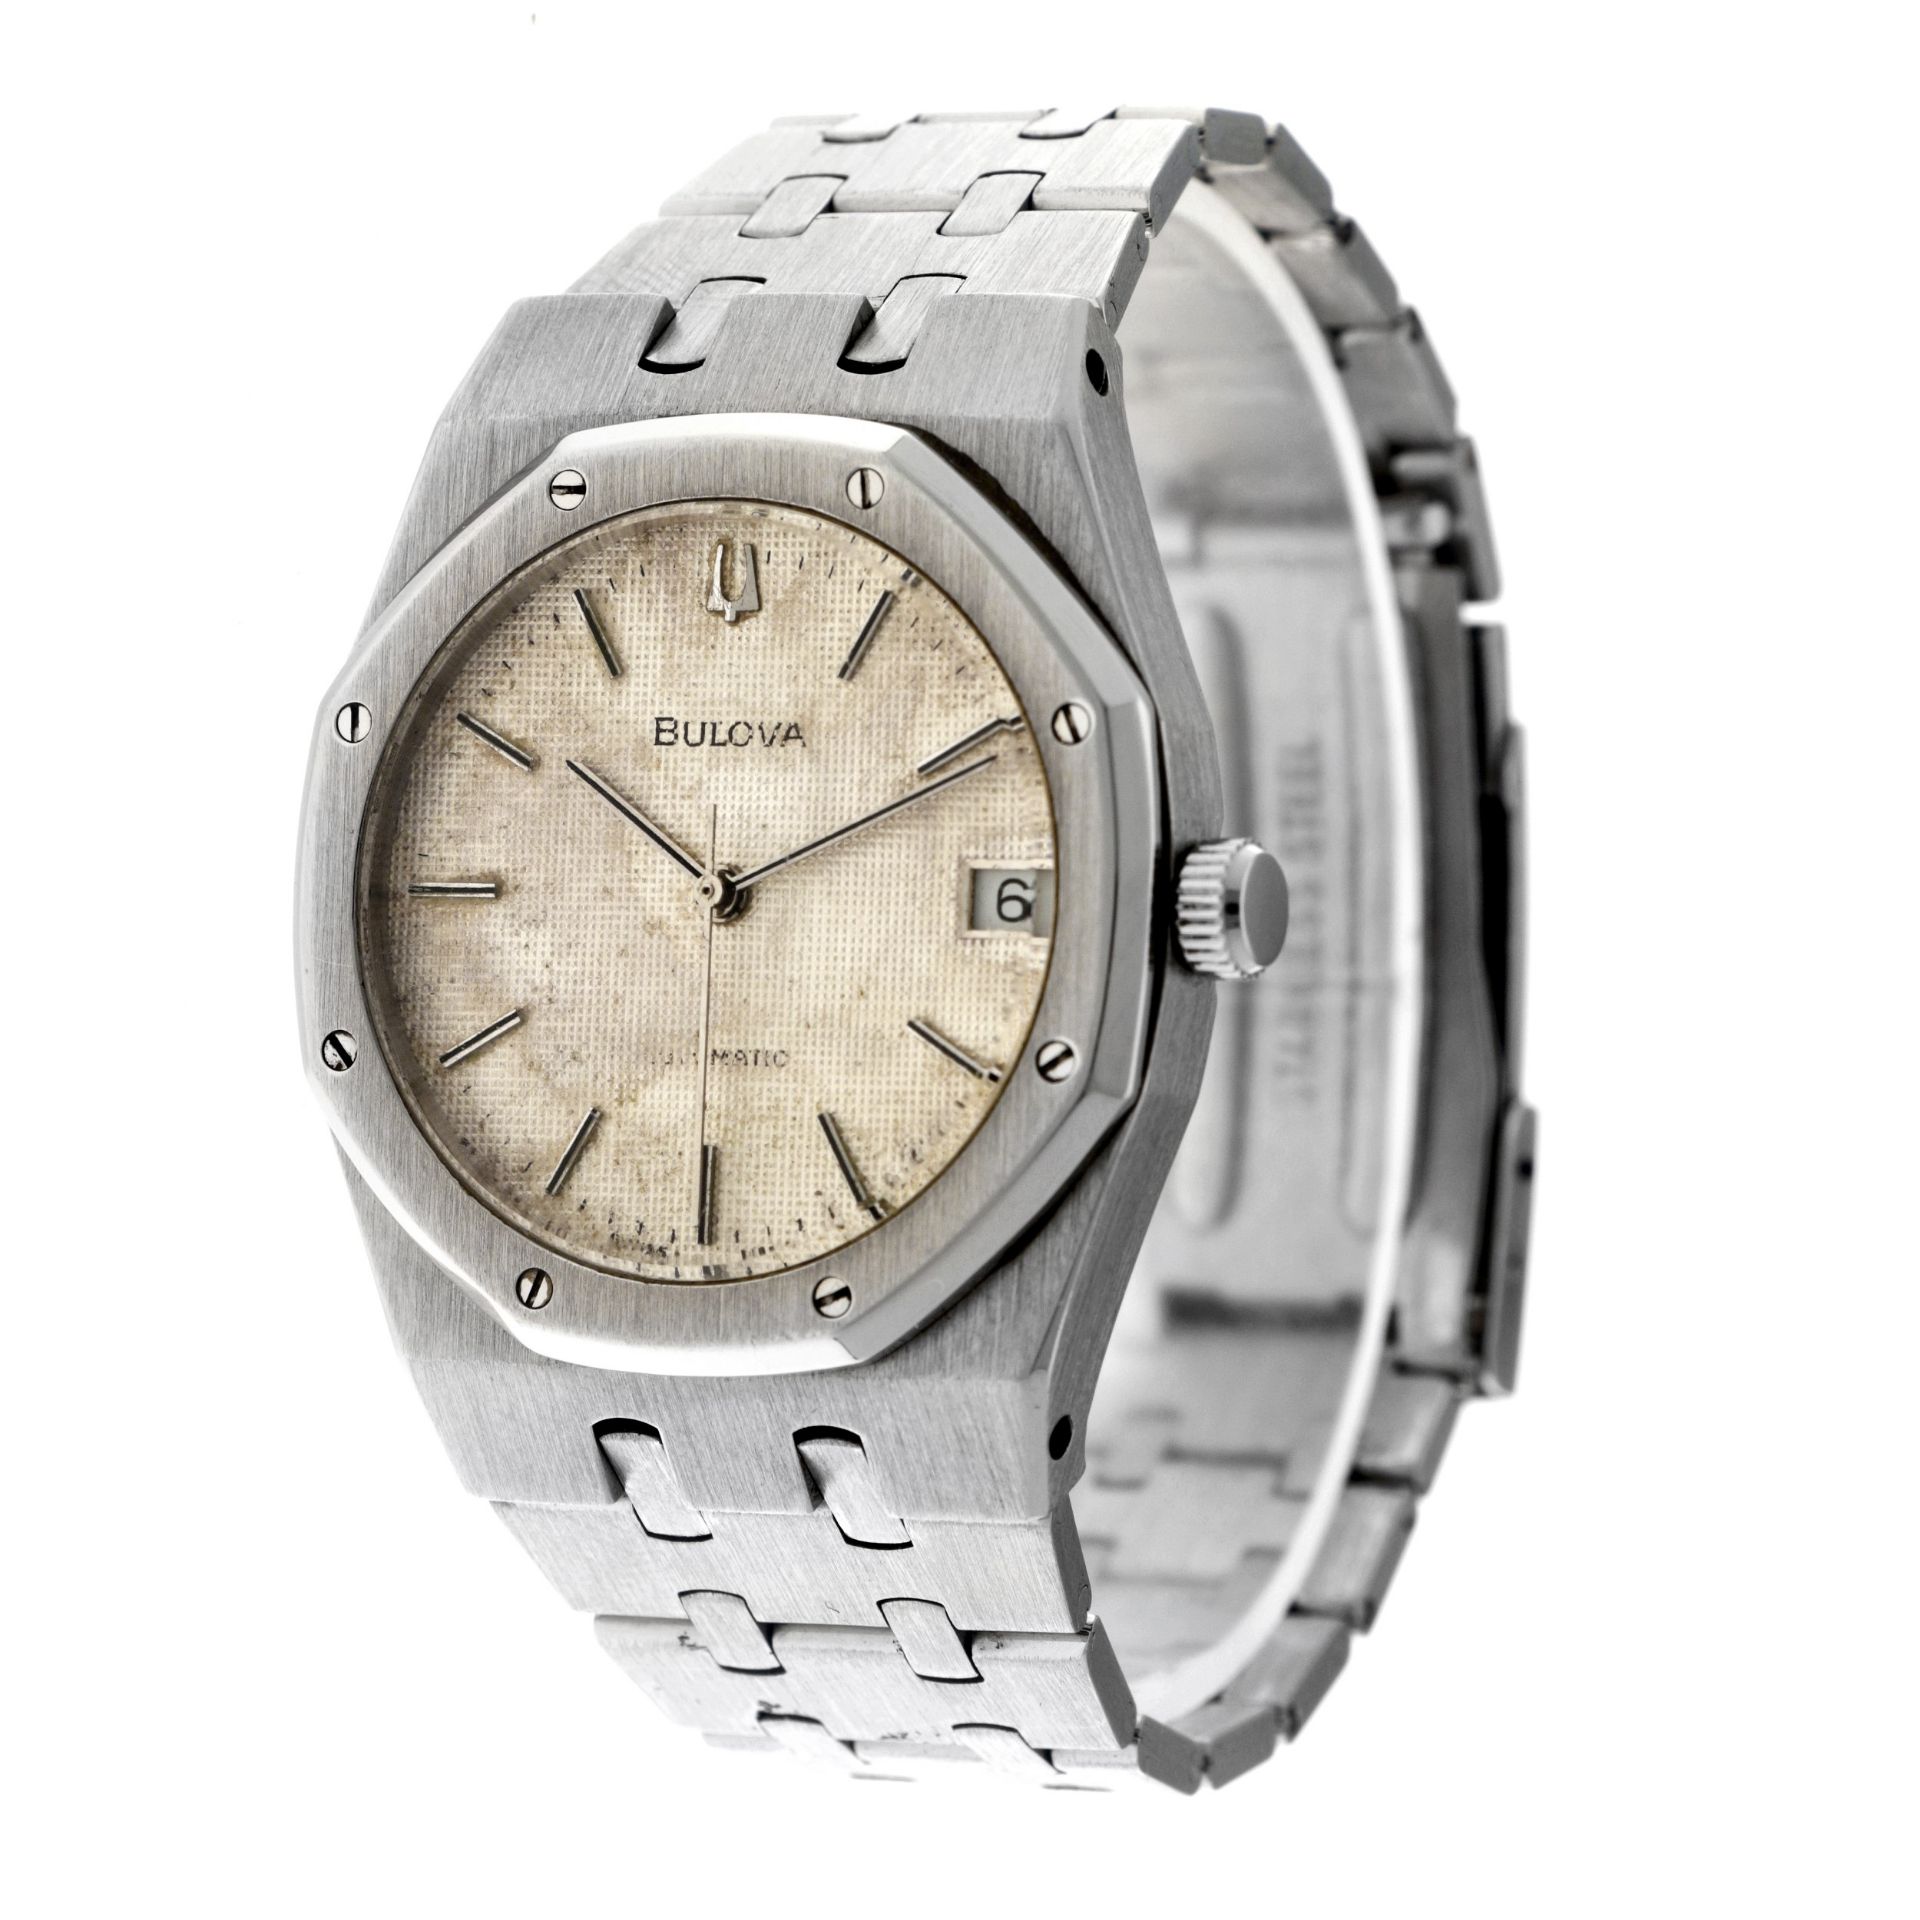 No Reserve - Bulova "Royal Oak" 4420101 - Men's watch. - Image 2 of 5